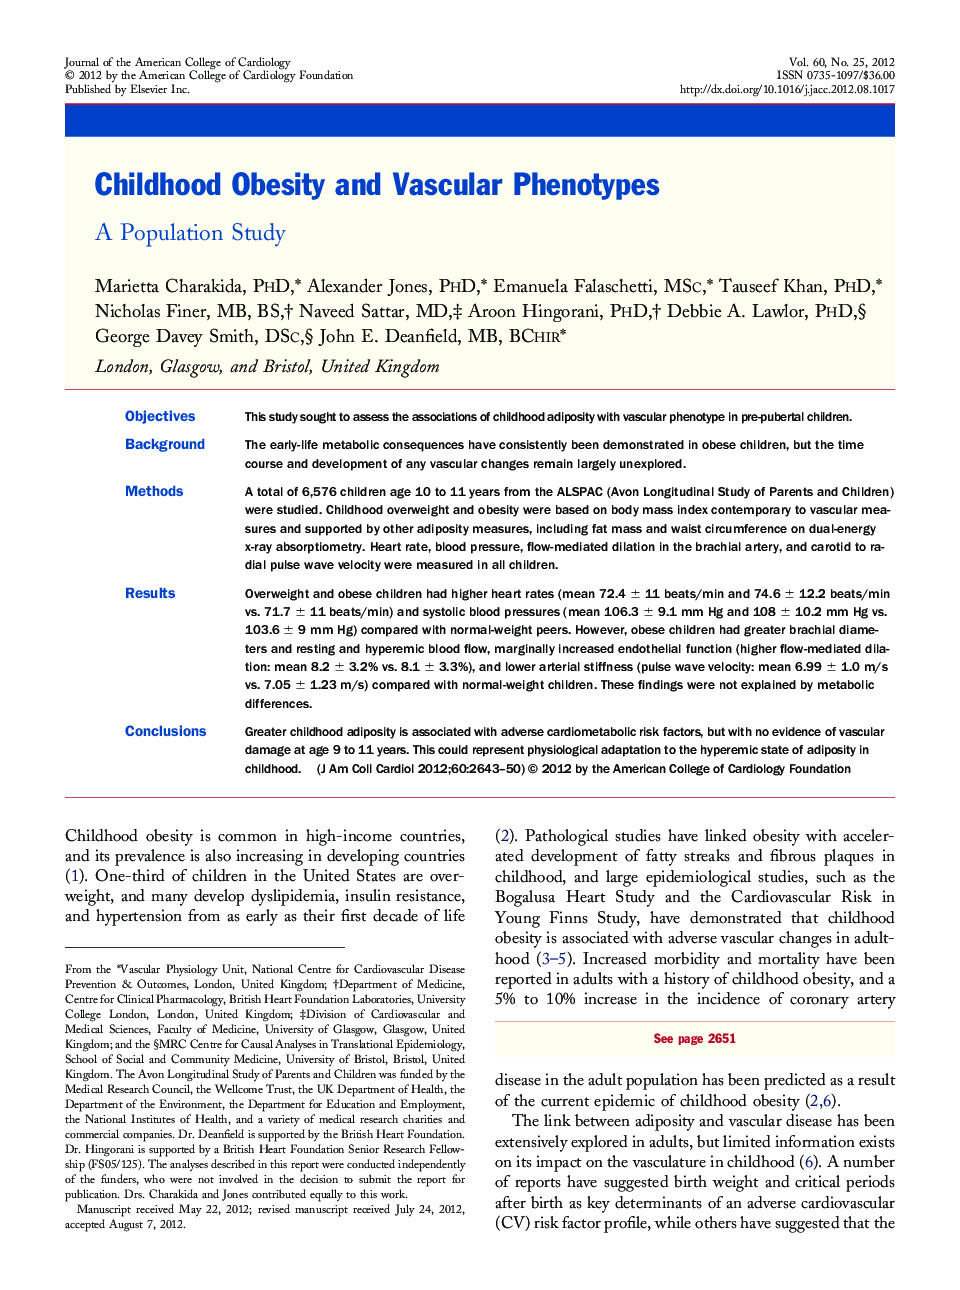 Childhood Obesity and Vascular Phenotypes : A Population Study